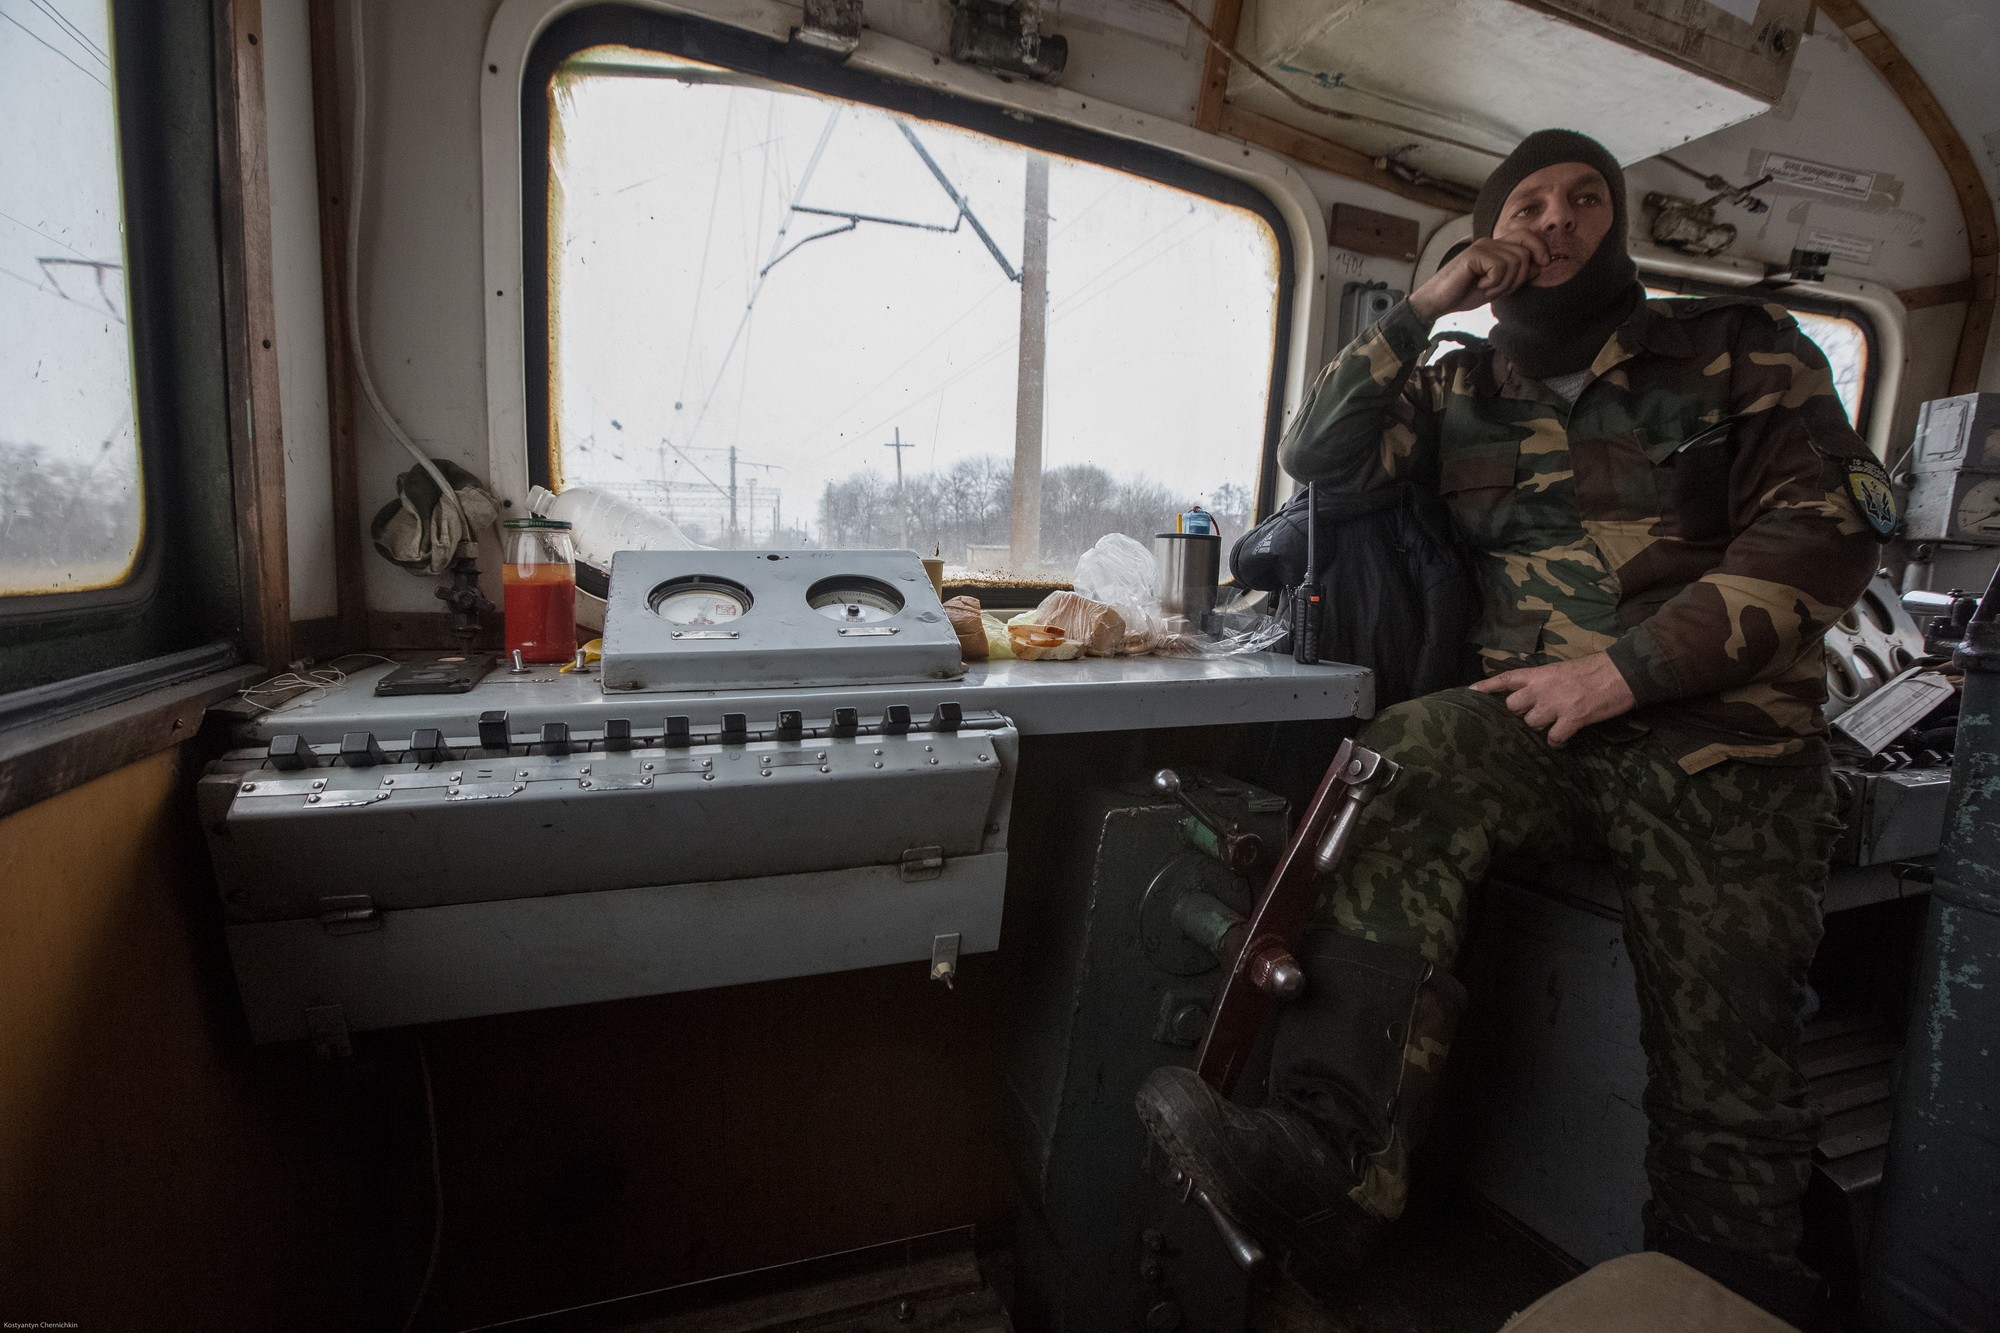 A veteran of Ukraine's ongoing war stands on duty onboard the blockaded train on Feb. 14, 2017.